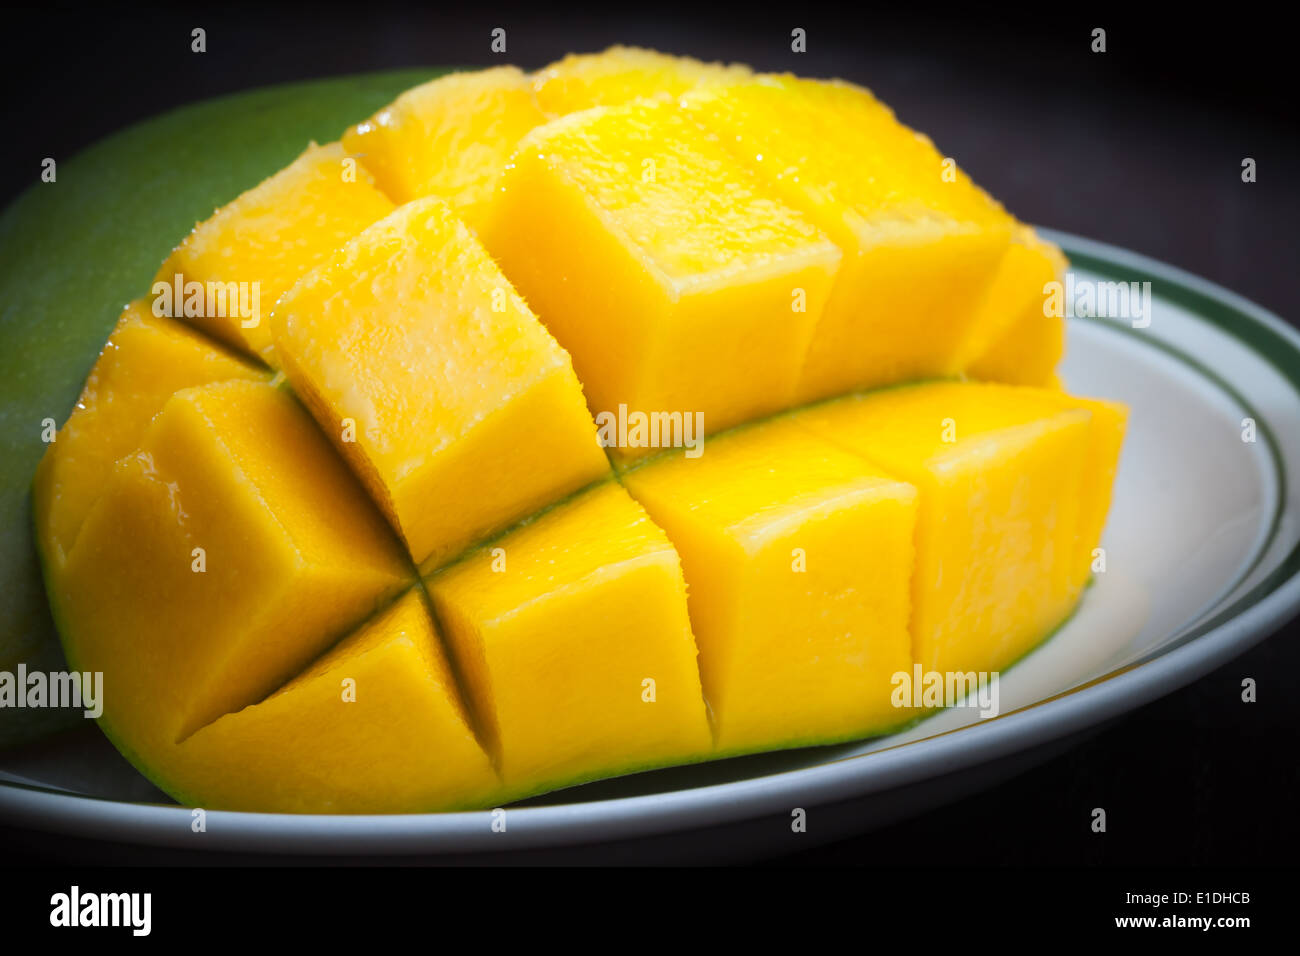 Macro photo of yellow sliced mango on white plate Stock Photo